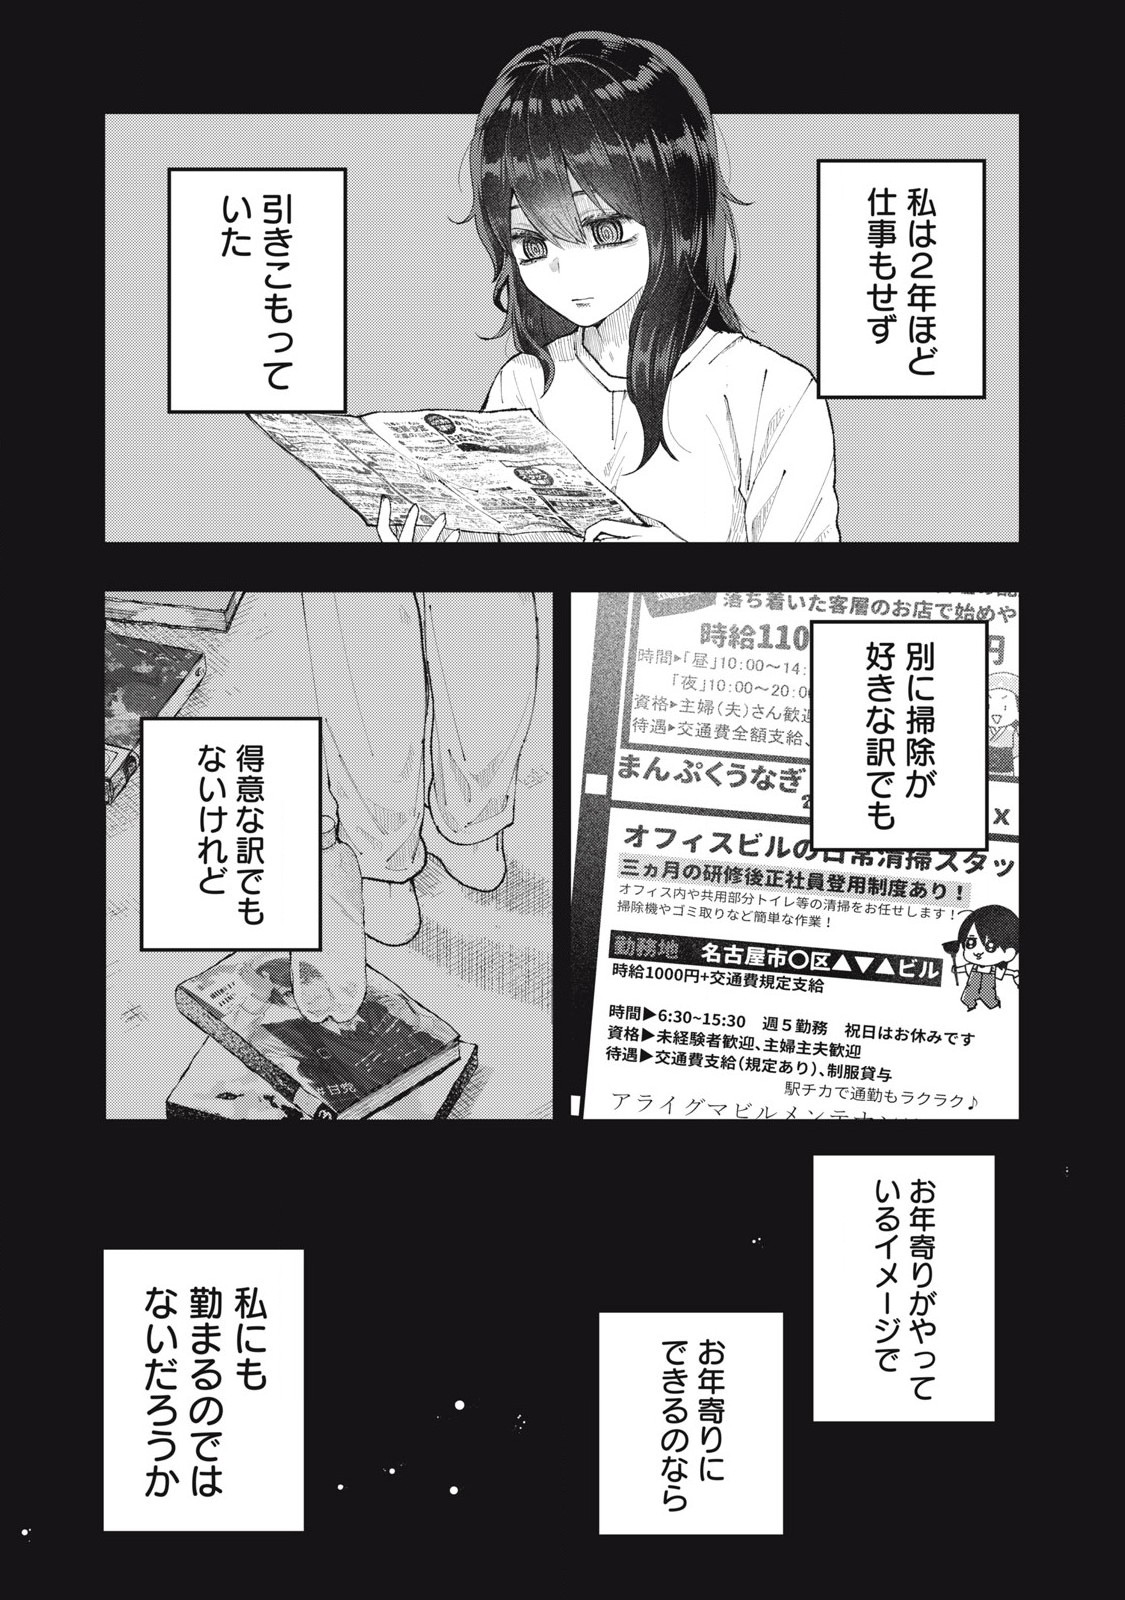 Seisouin Nono-chan Kyou no Tsubuyaki - Chapter 5 - Page 1